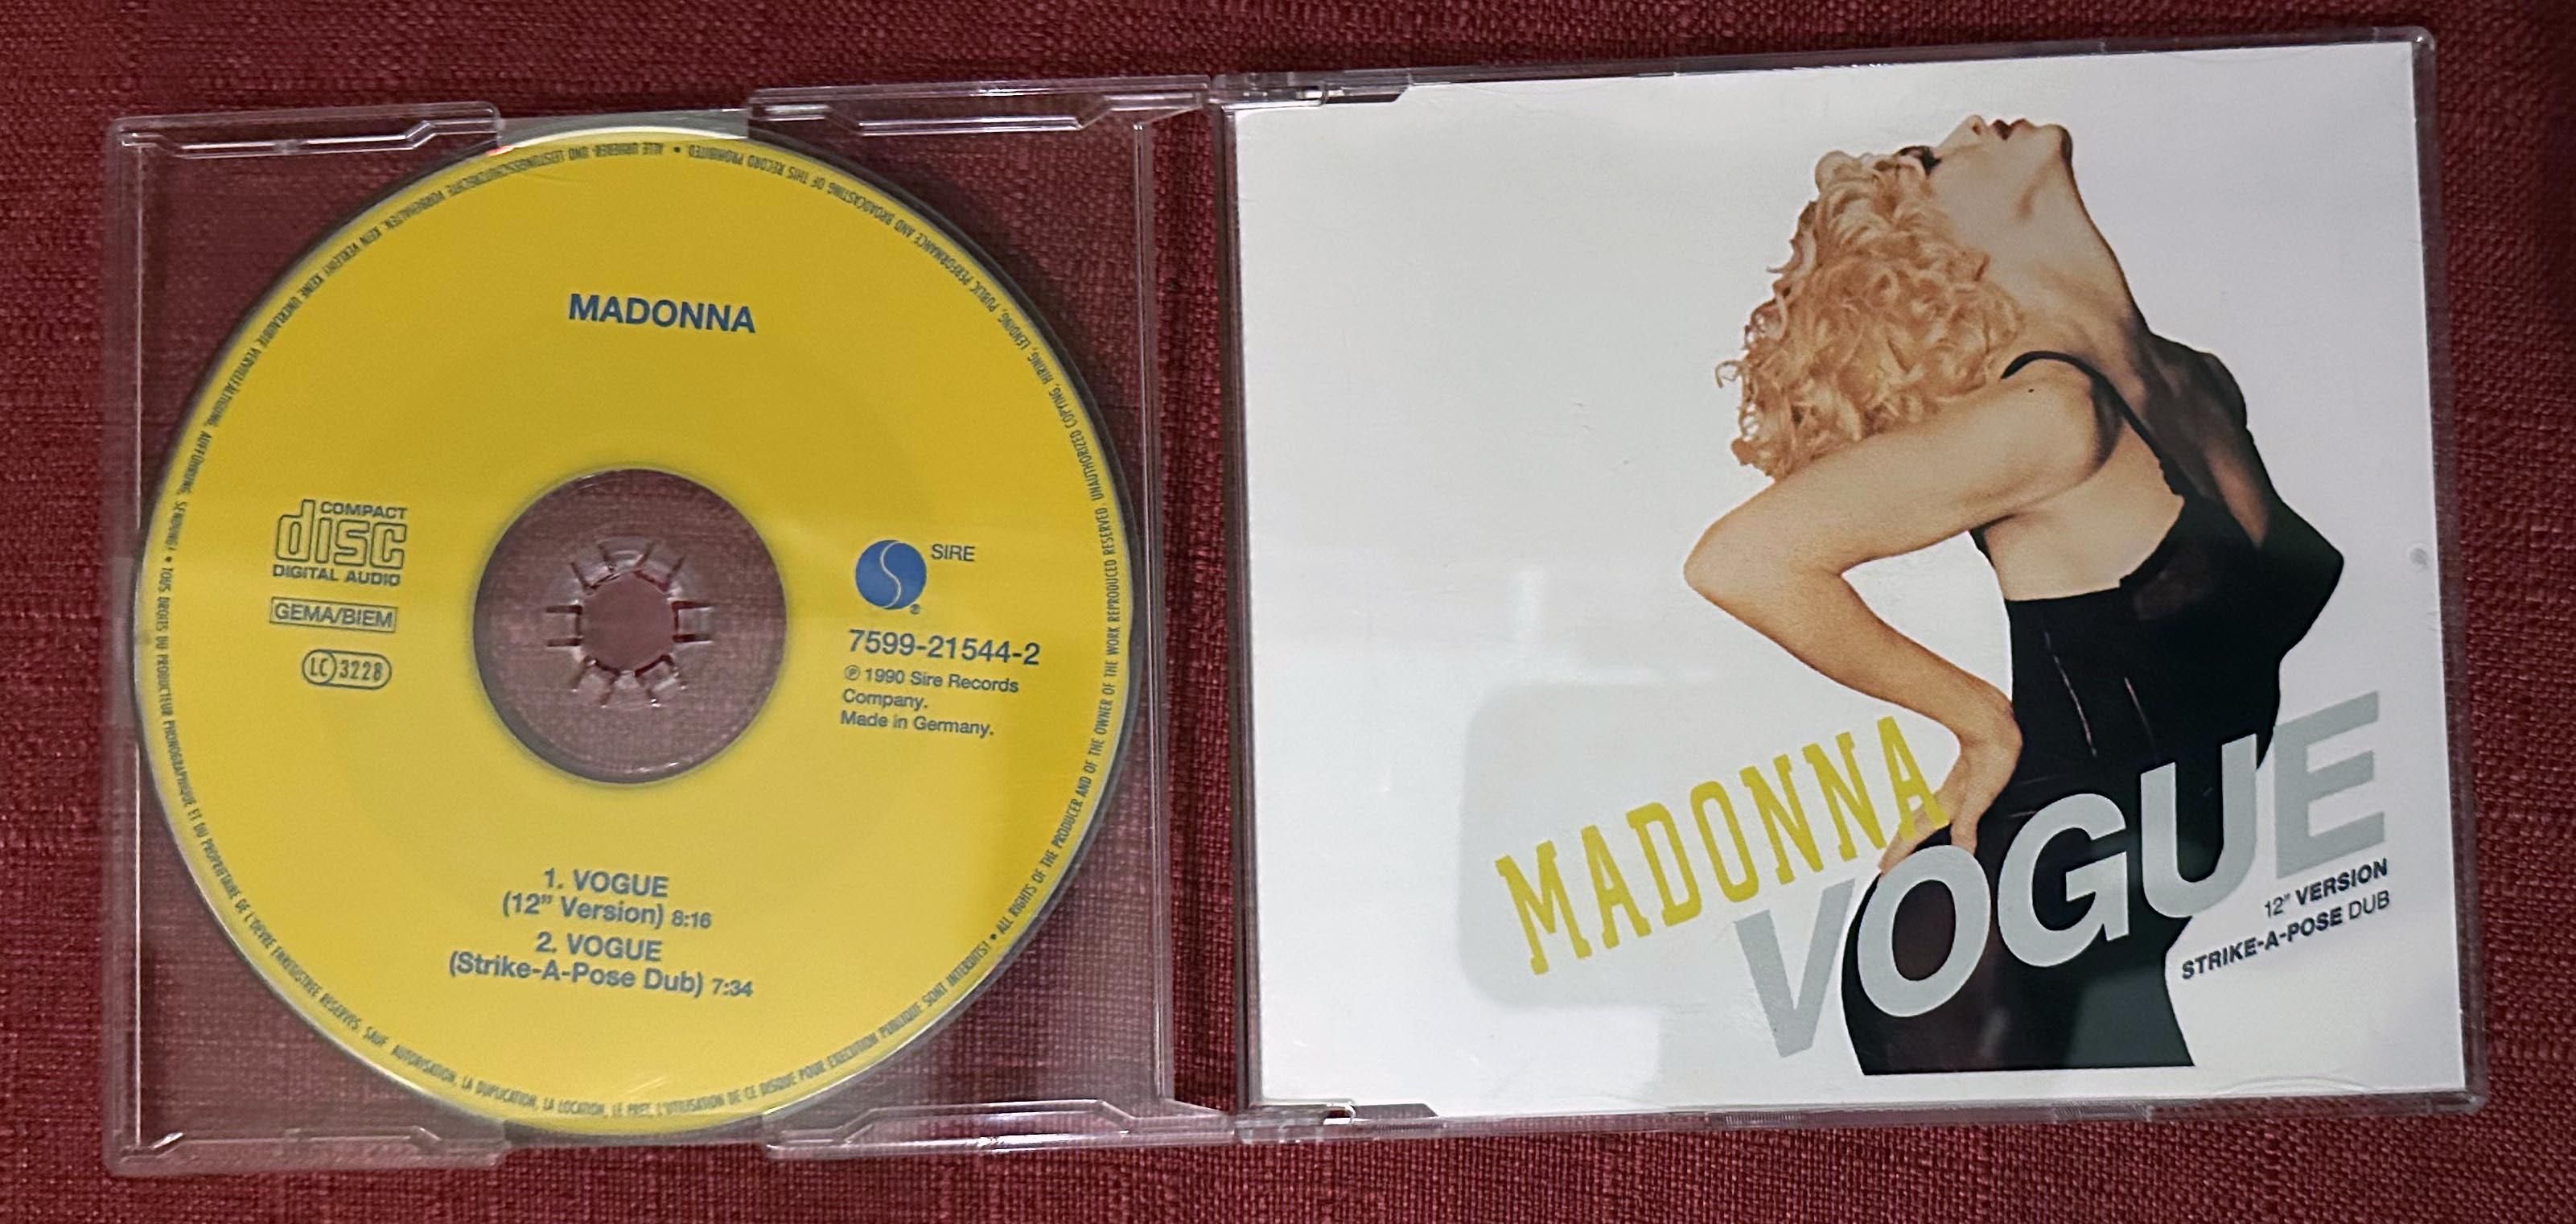 Madonna Cd Single Yellow Series/Star series